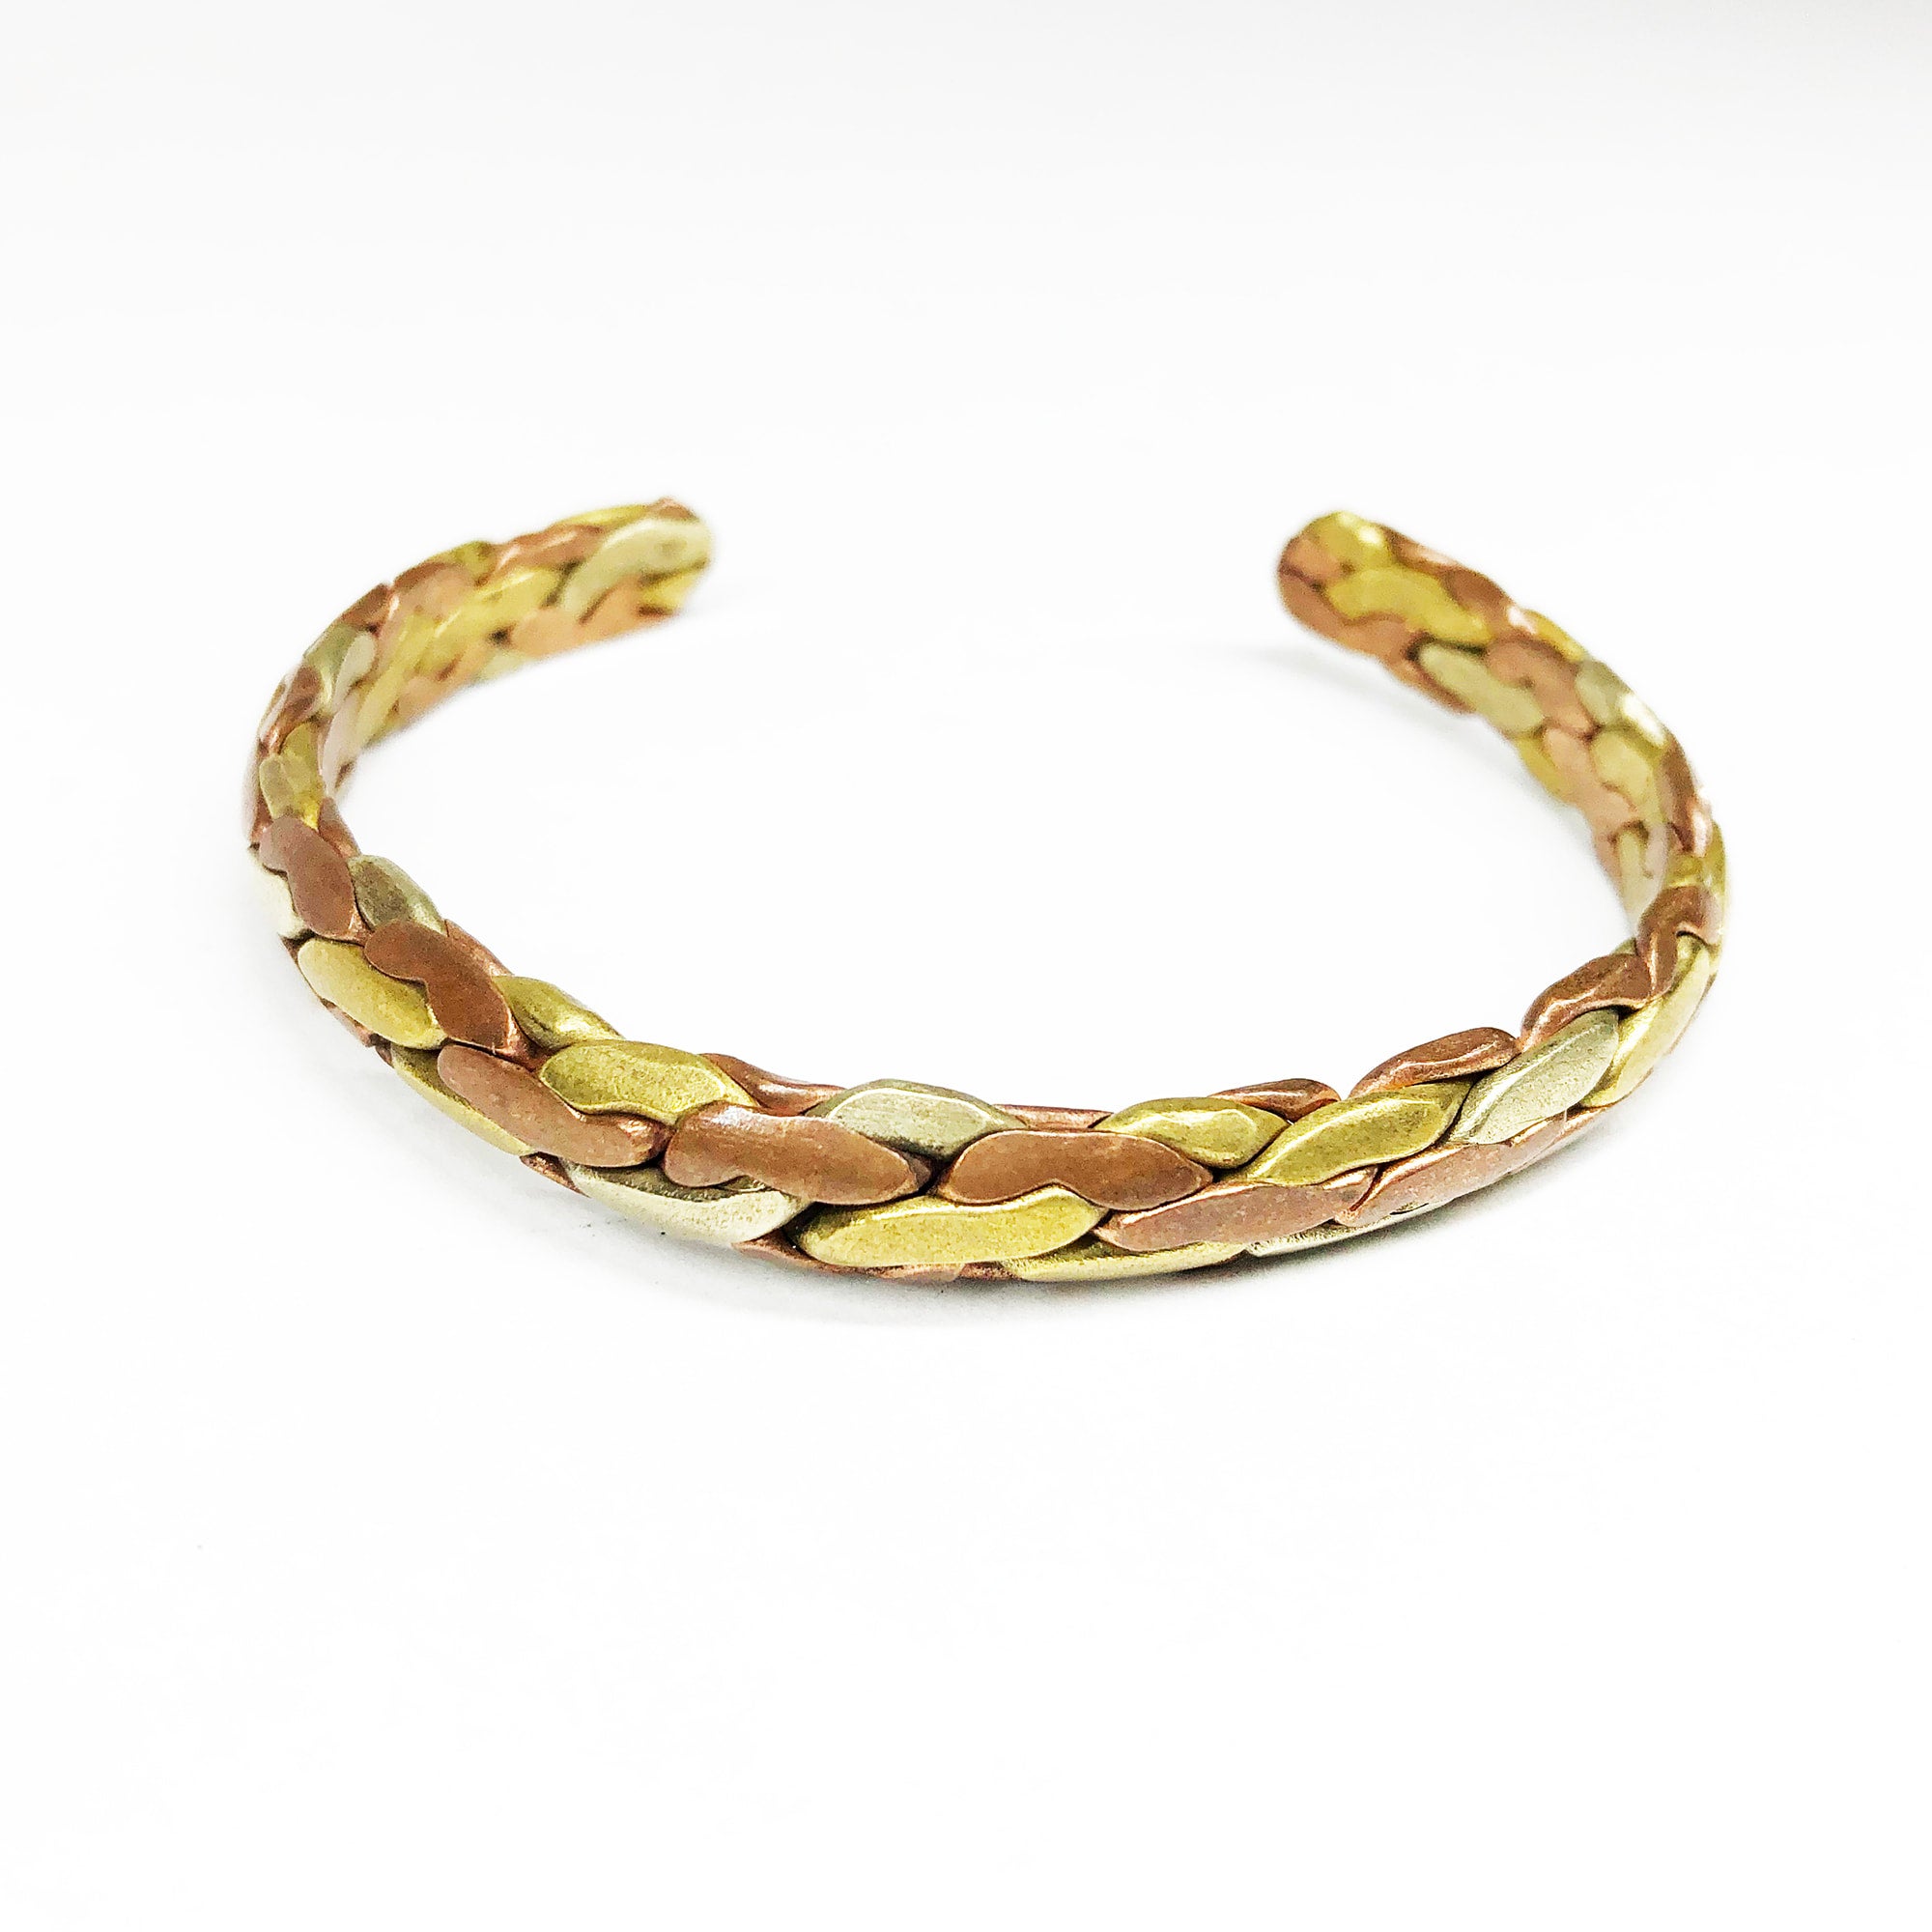 Flat Twisted Copper Bracelet, Three Metal Twisted Cuff Bracelet | eBay